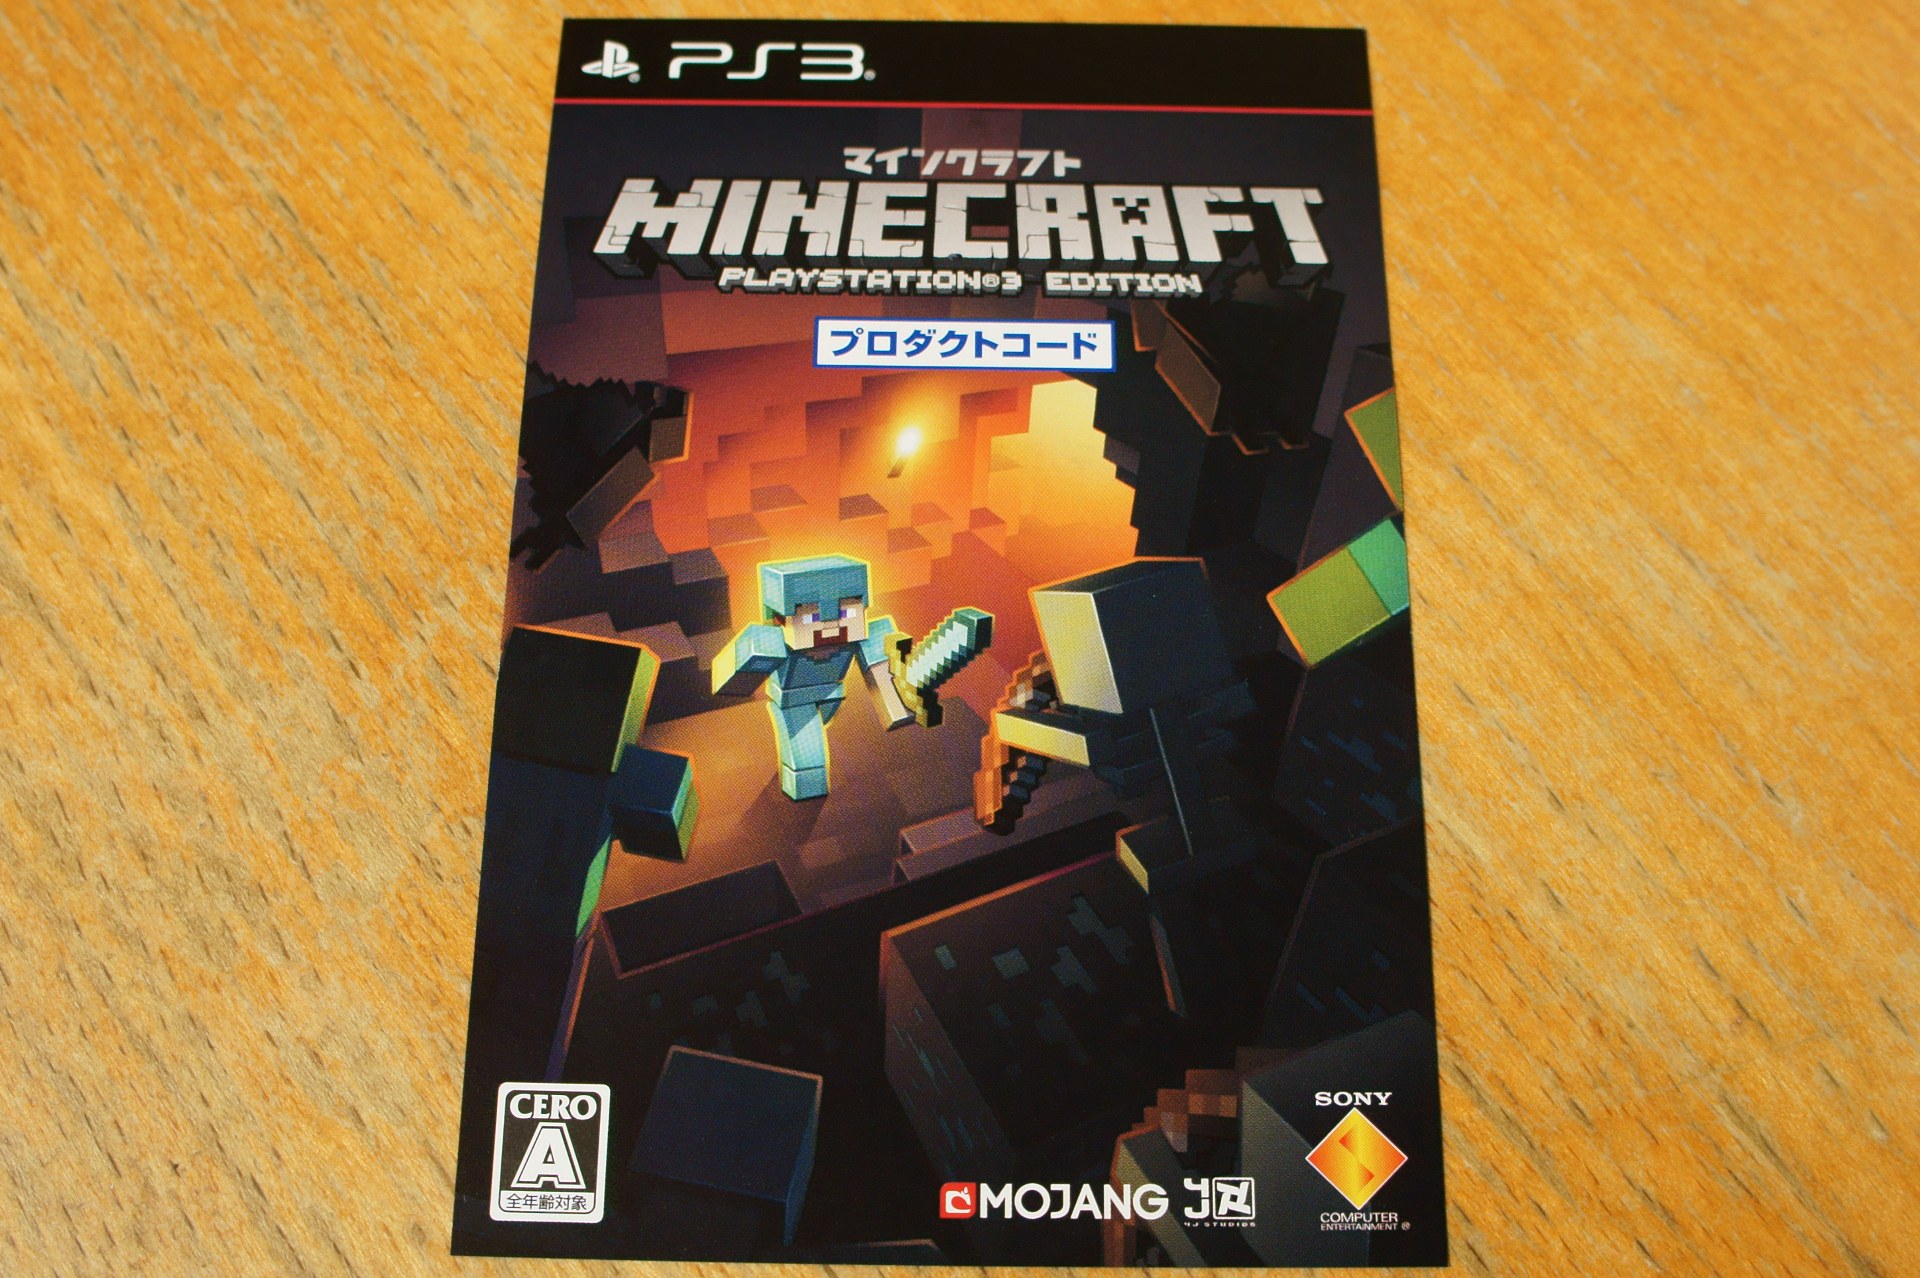 Ps3版 Minecraft Playstation3 Edition のスクリーンショット紹介 雑雪帳